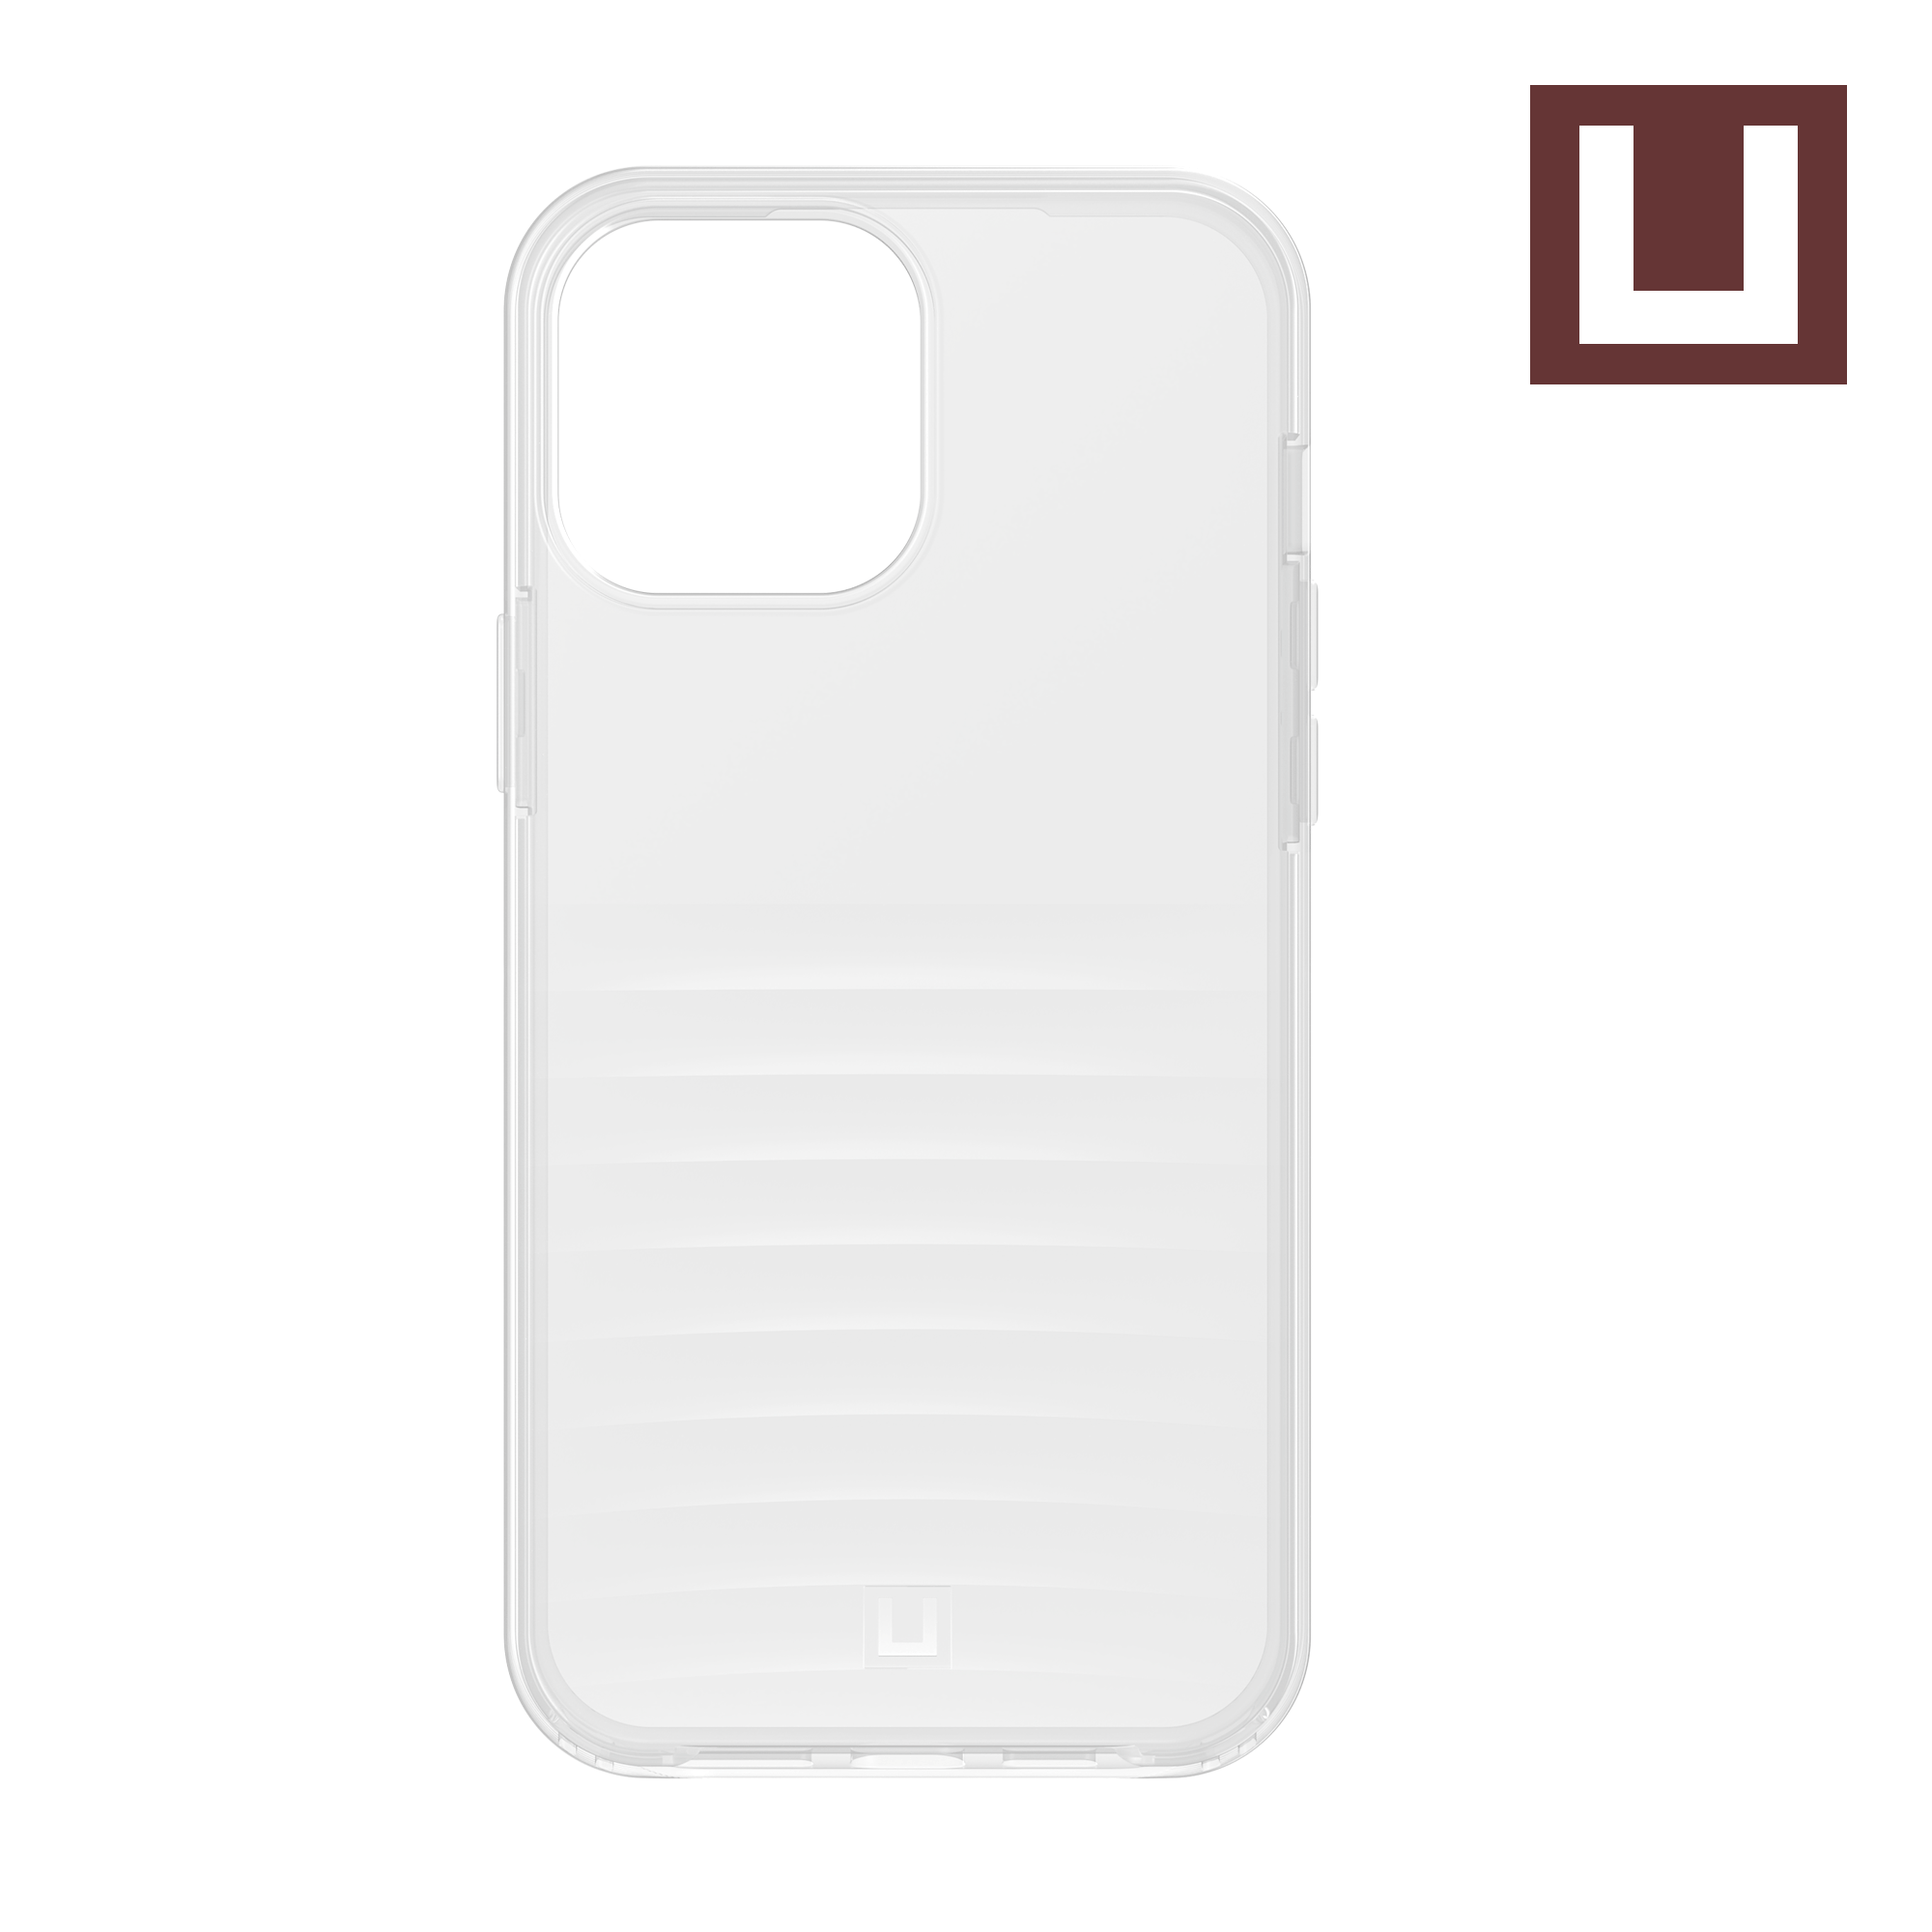  [U] Ốp lưng Wave cho iPhone 13 Pro Max [6.7 inch] 